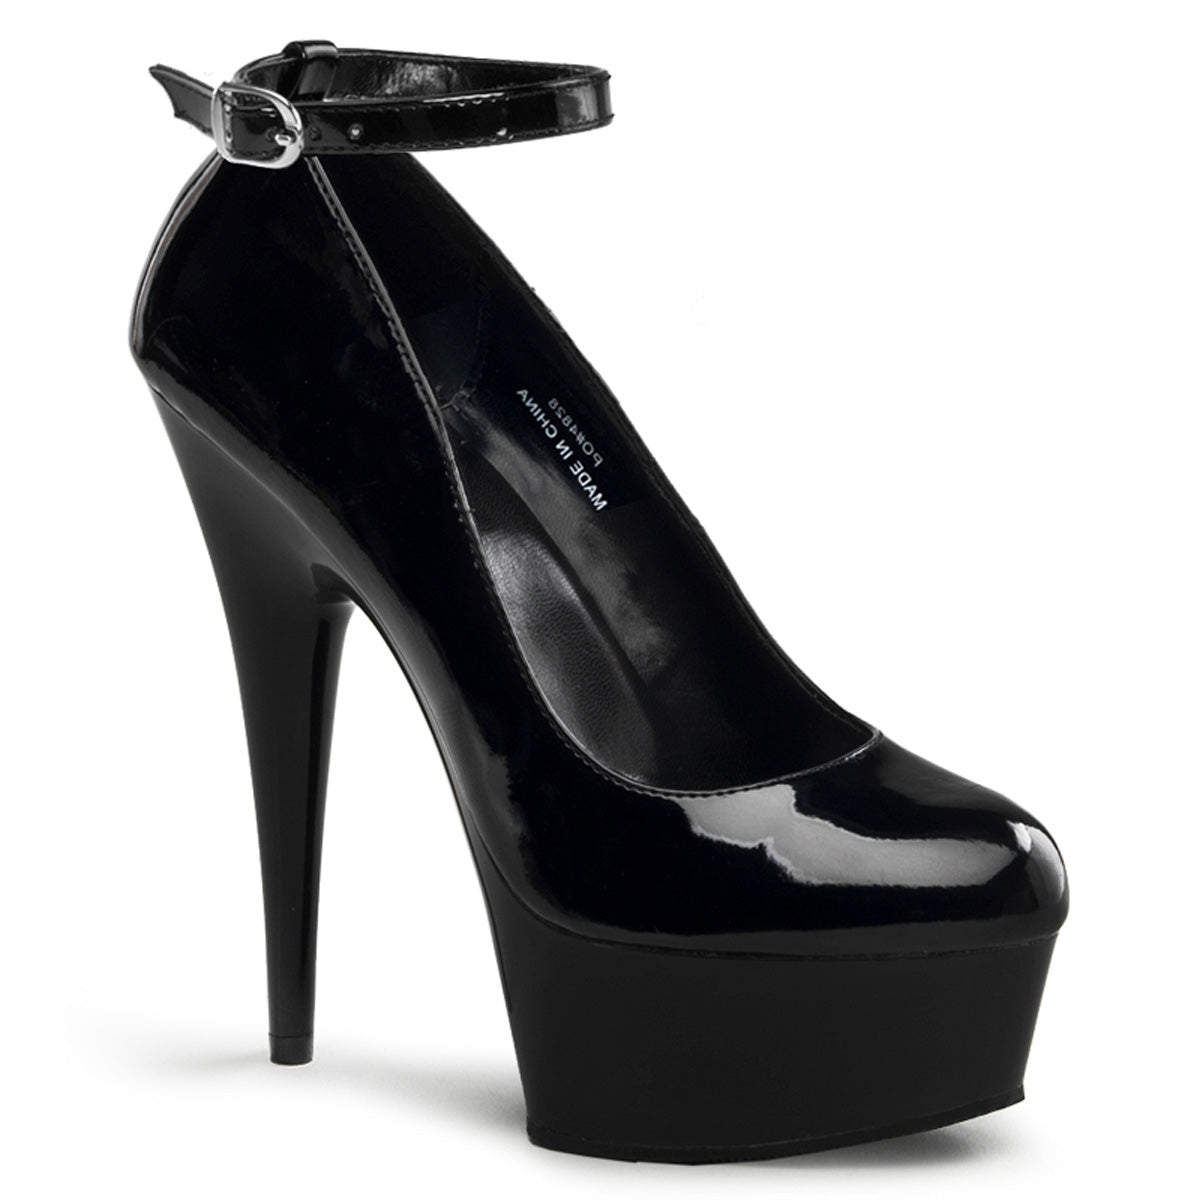 DELIGHT-686 6" Heel Black Patent Pole Dancing Platforms-Pleaser- Sexy Shoes